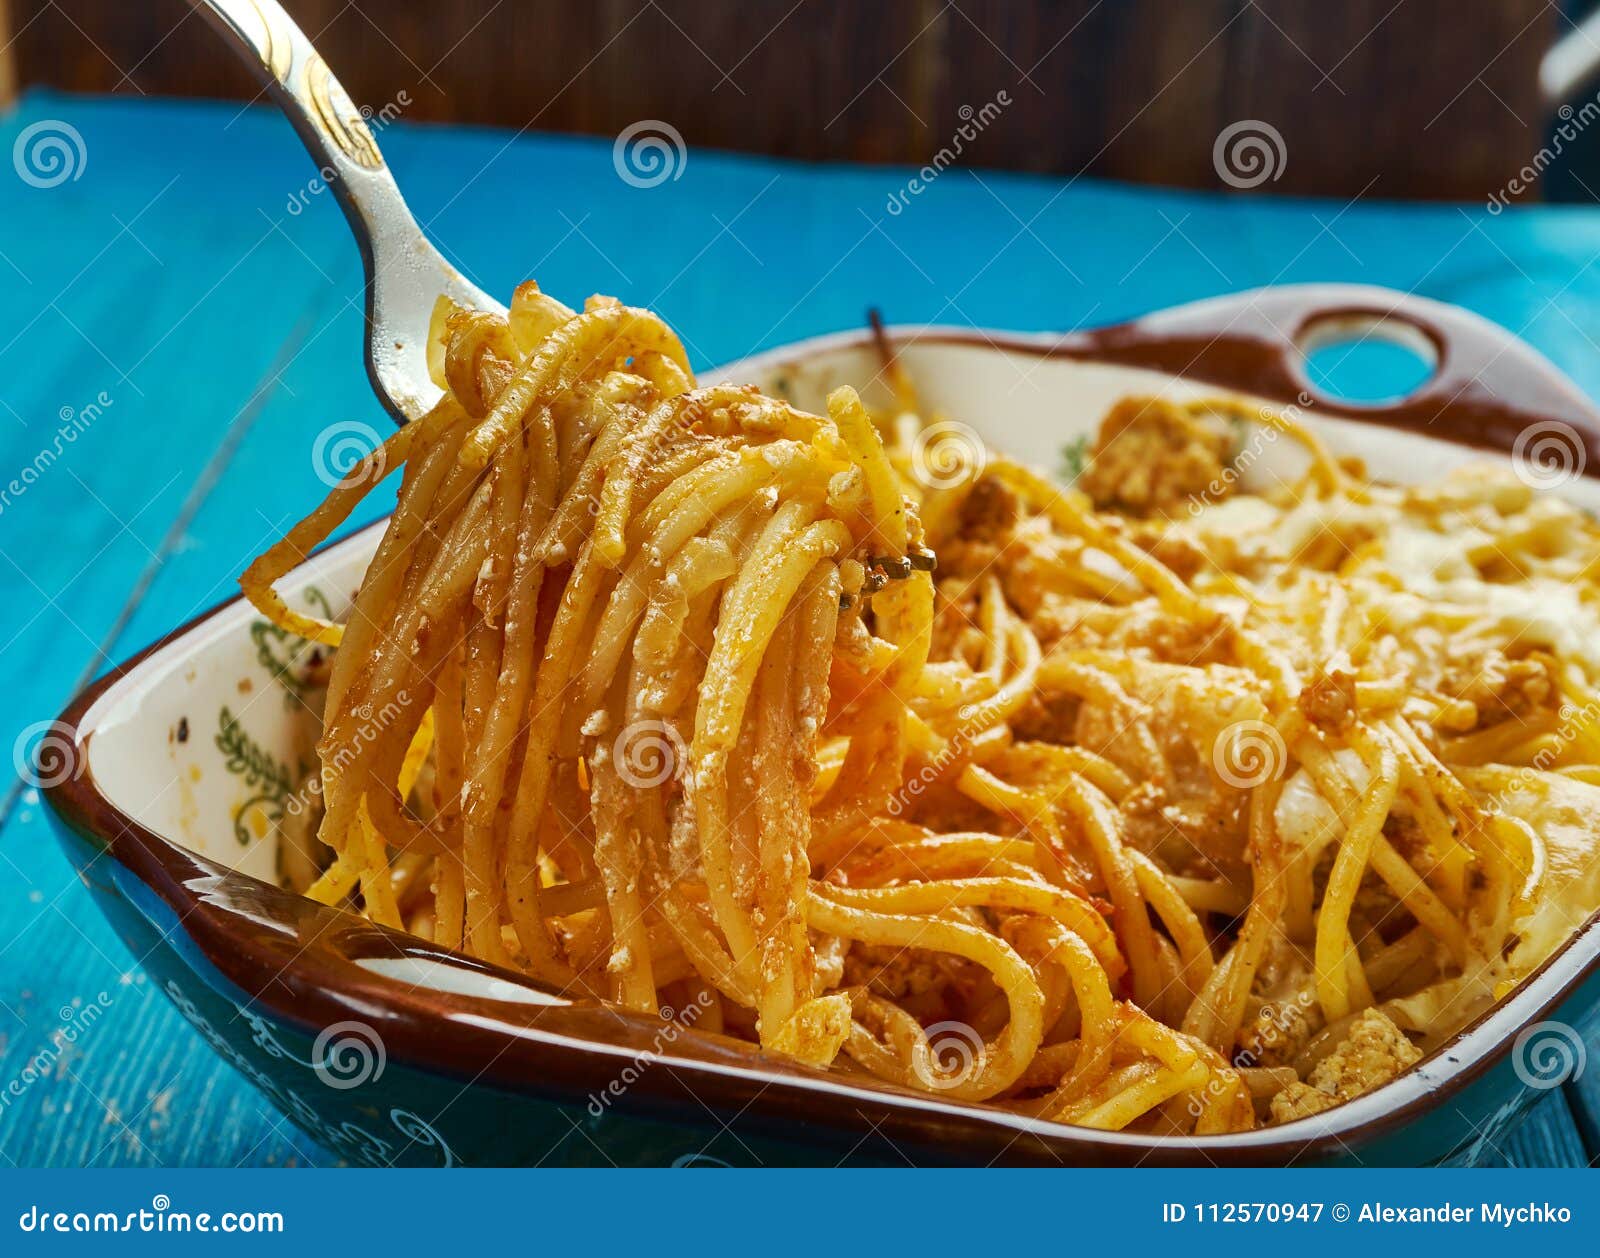 Baked Cream Cheese Spaghetti Casserole Stock Image - Image ...